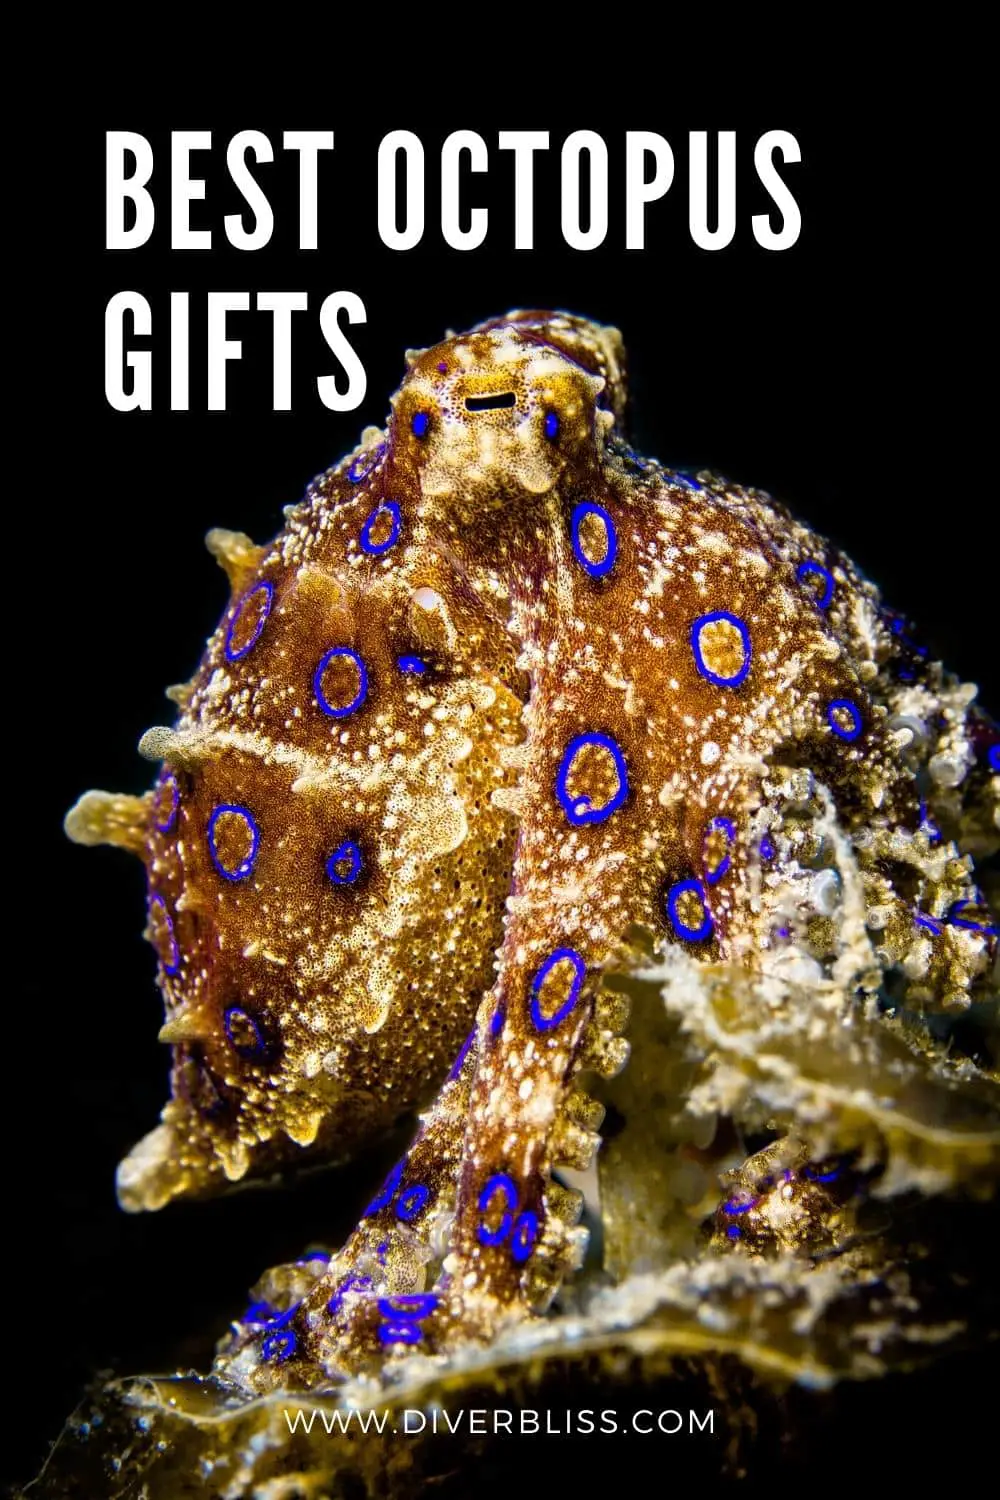 Best octopus gifts